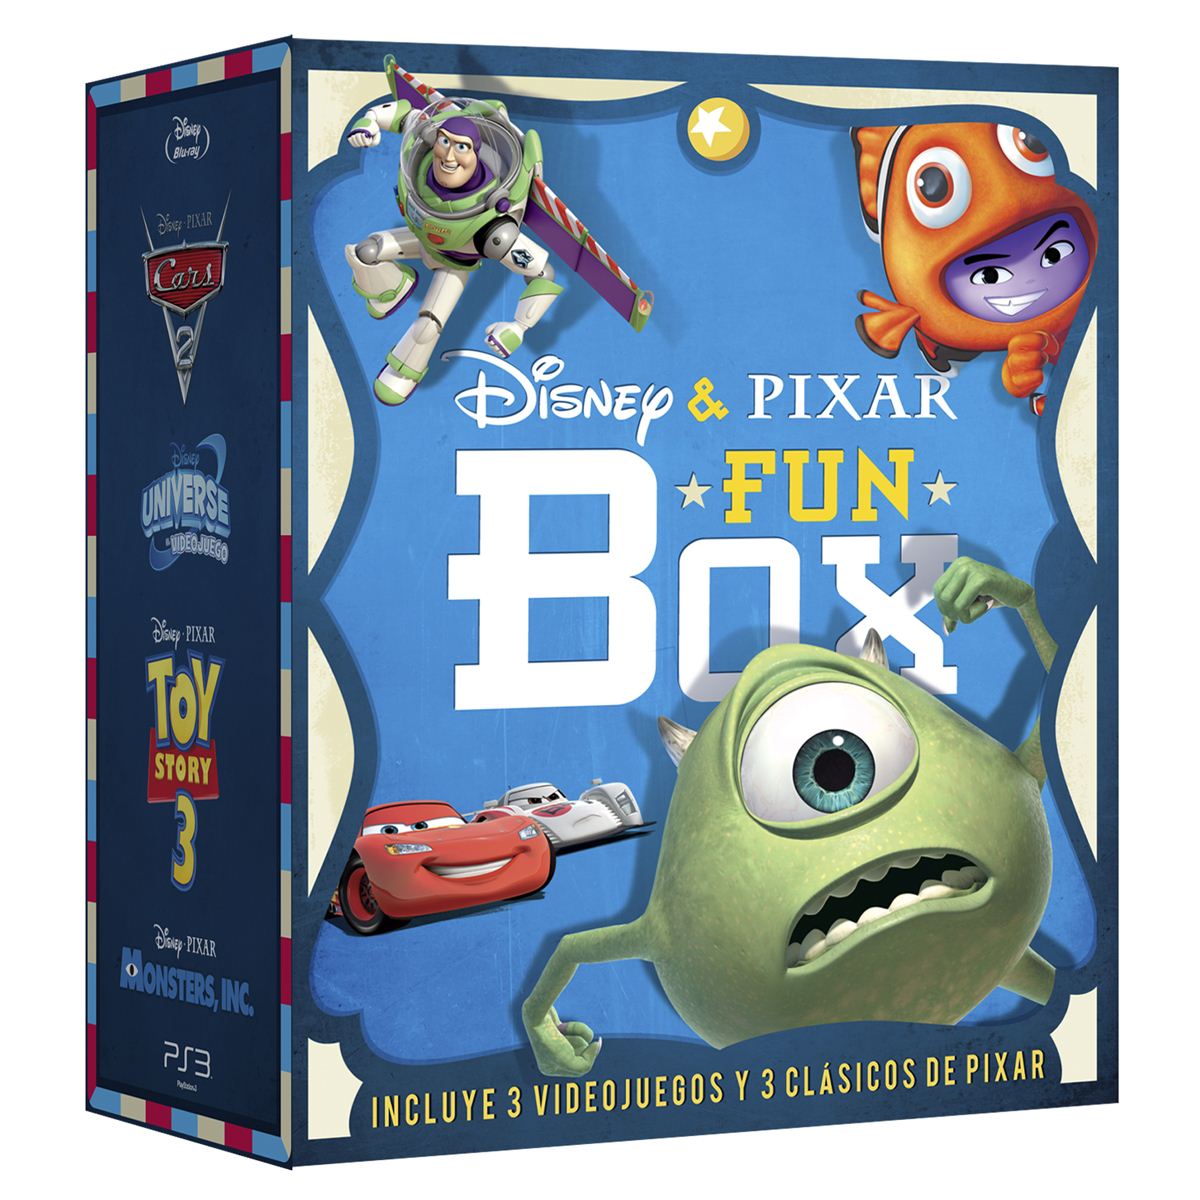 PS3 Disney Pixar Funbox